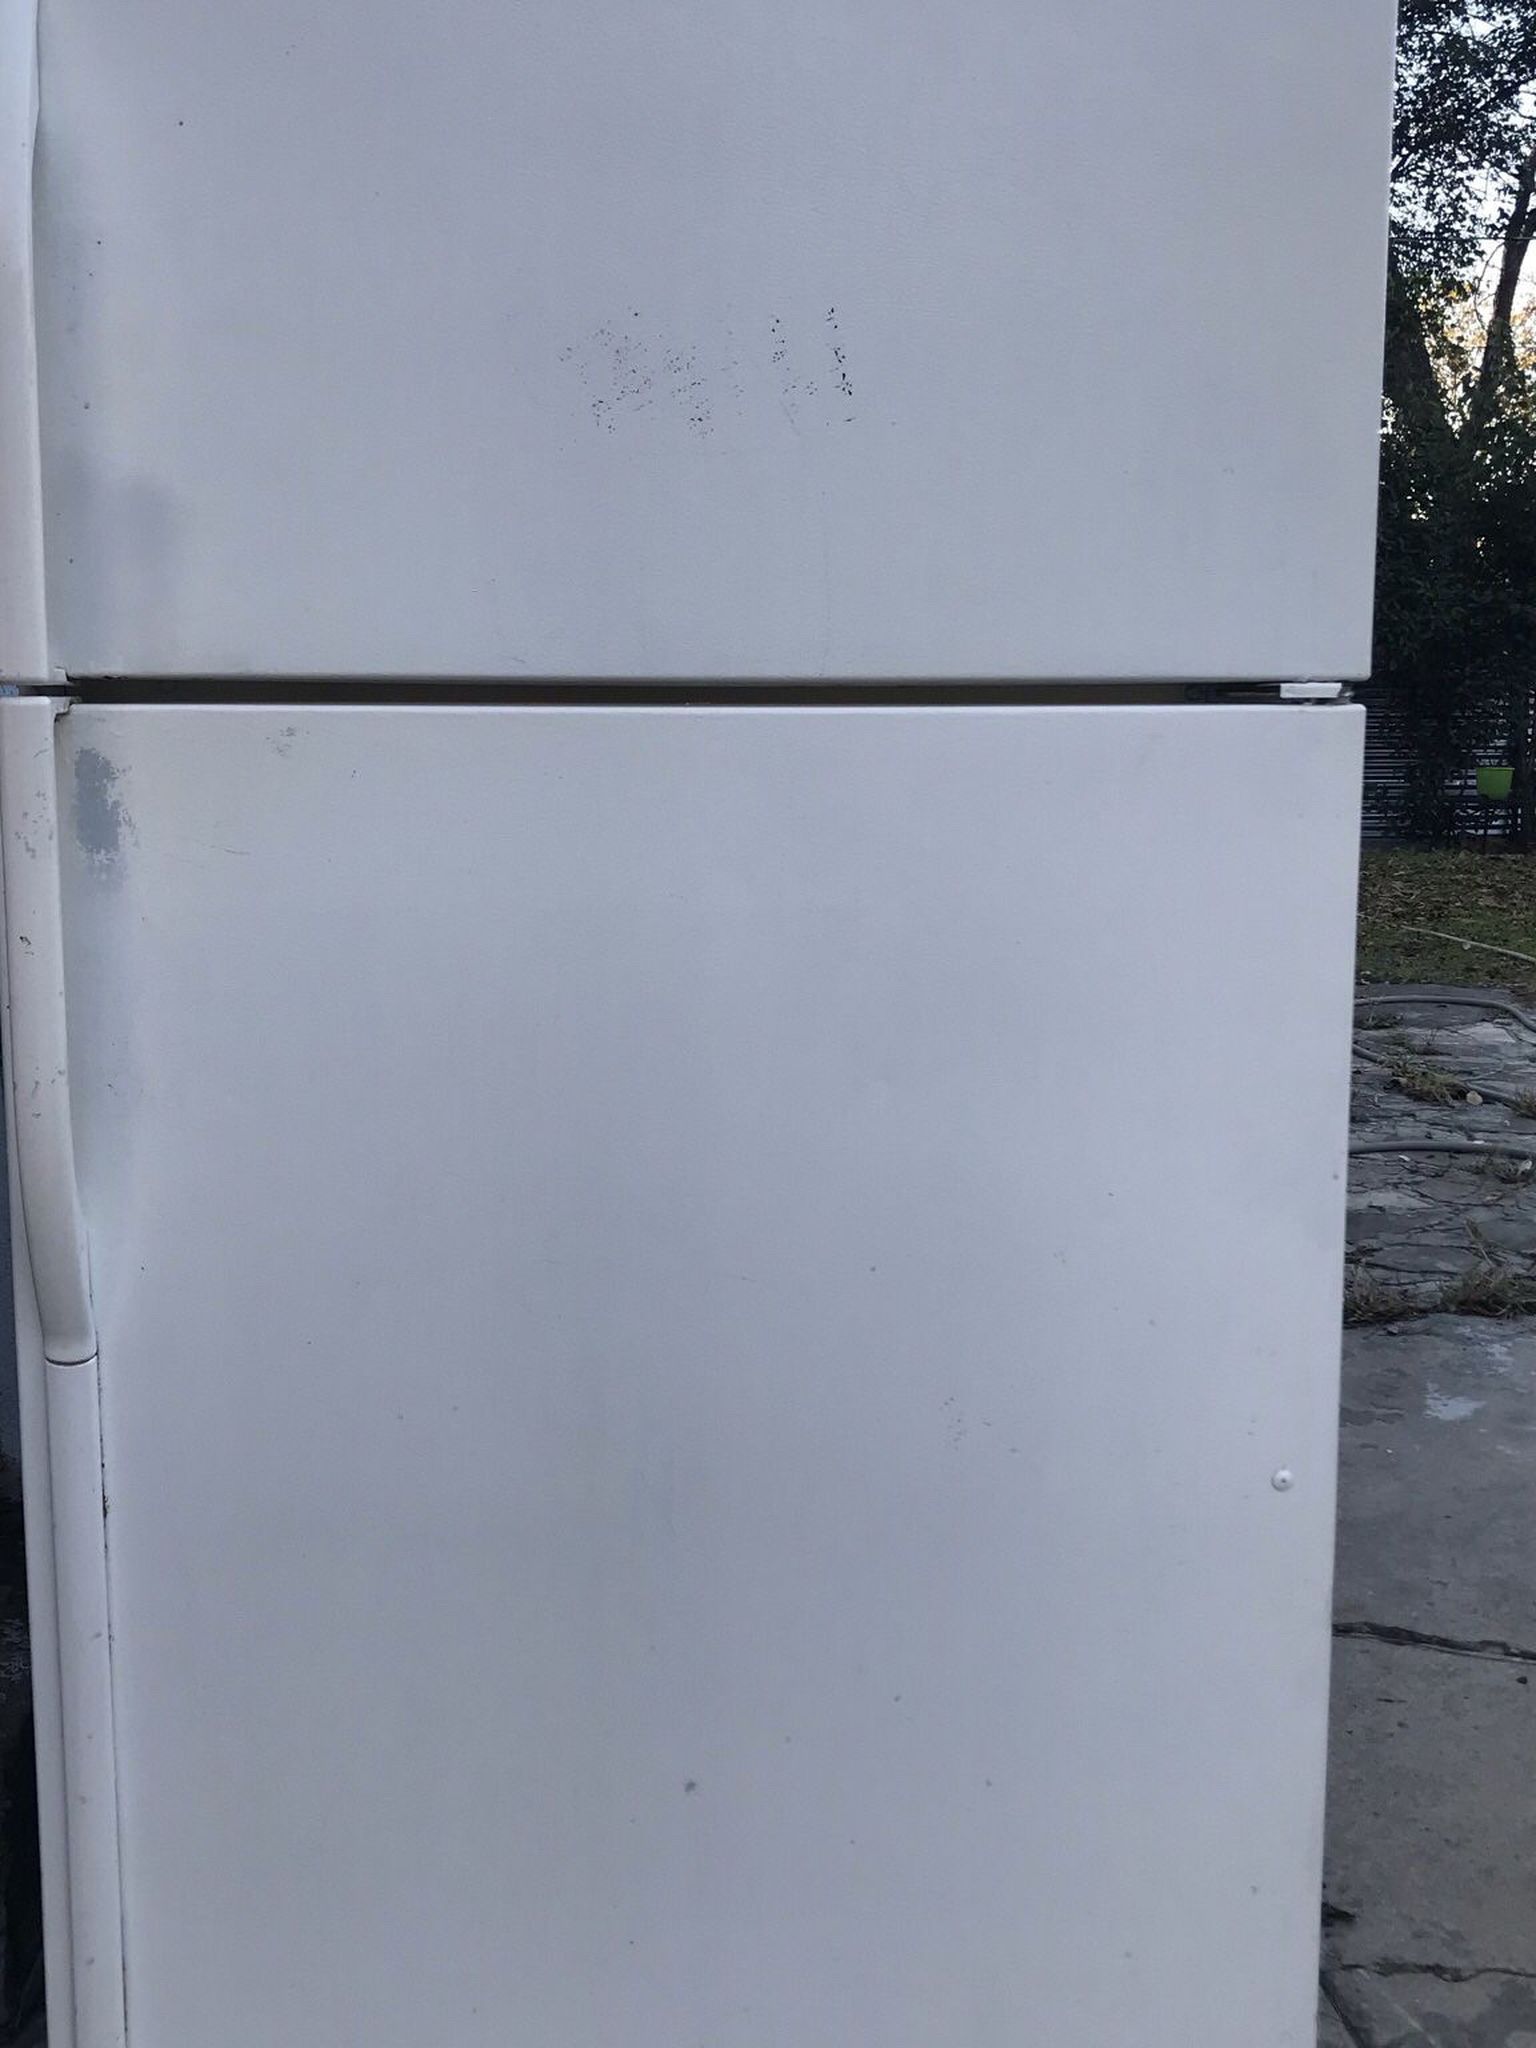 🎈Kenmore Refrigerator For Sale.